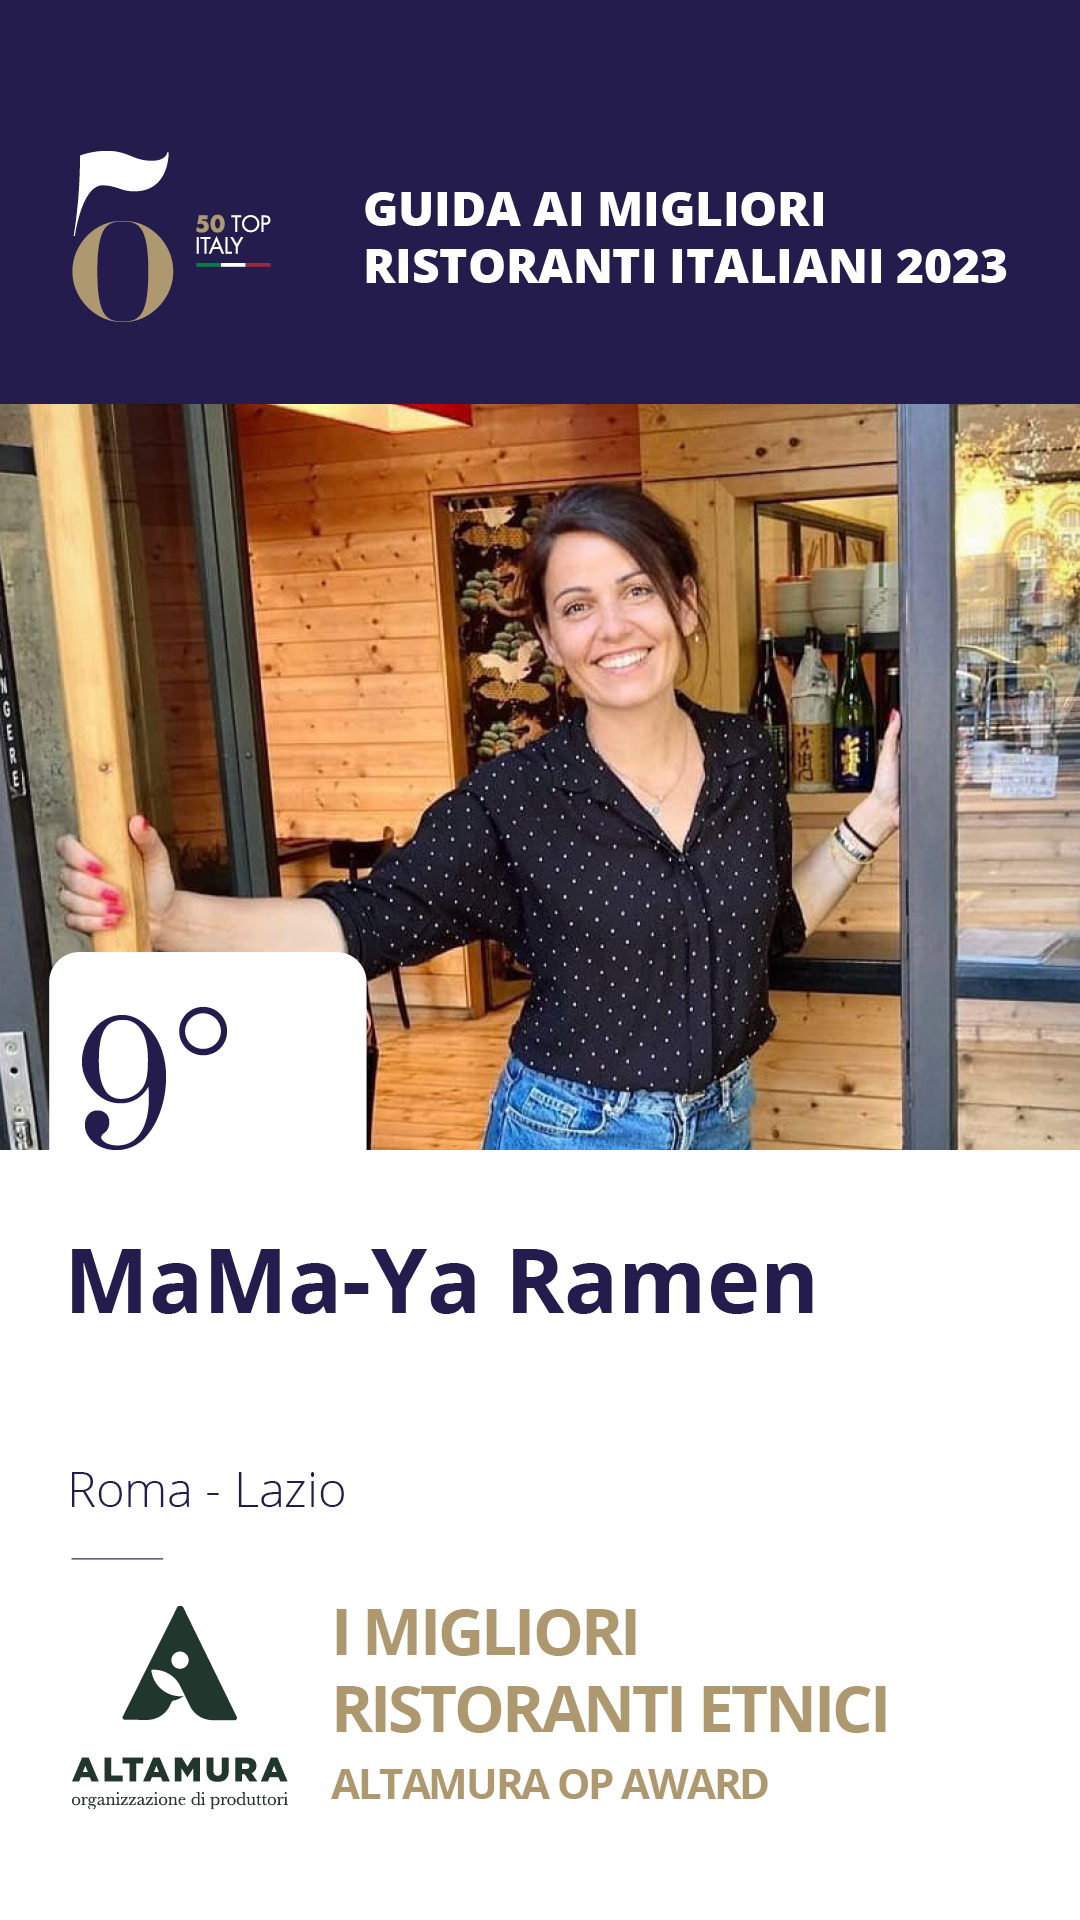 9 - MaMa-Ya Ramen – Roma, Lazio